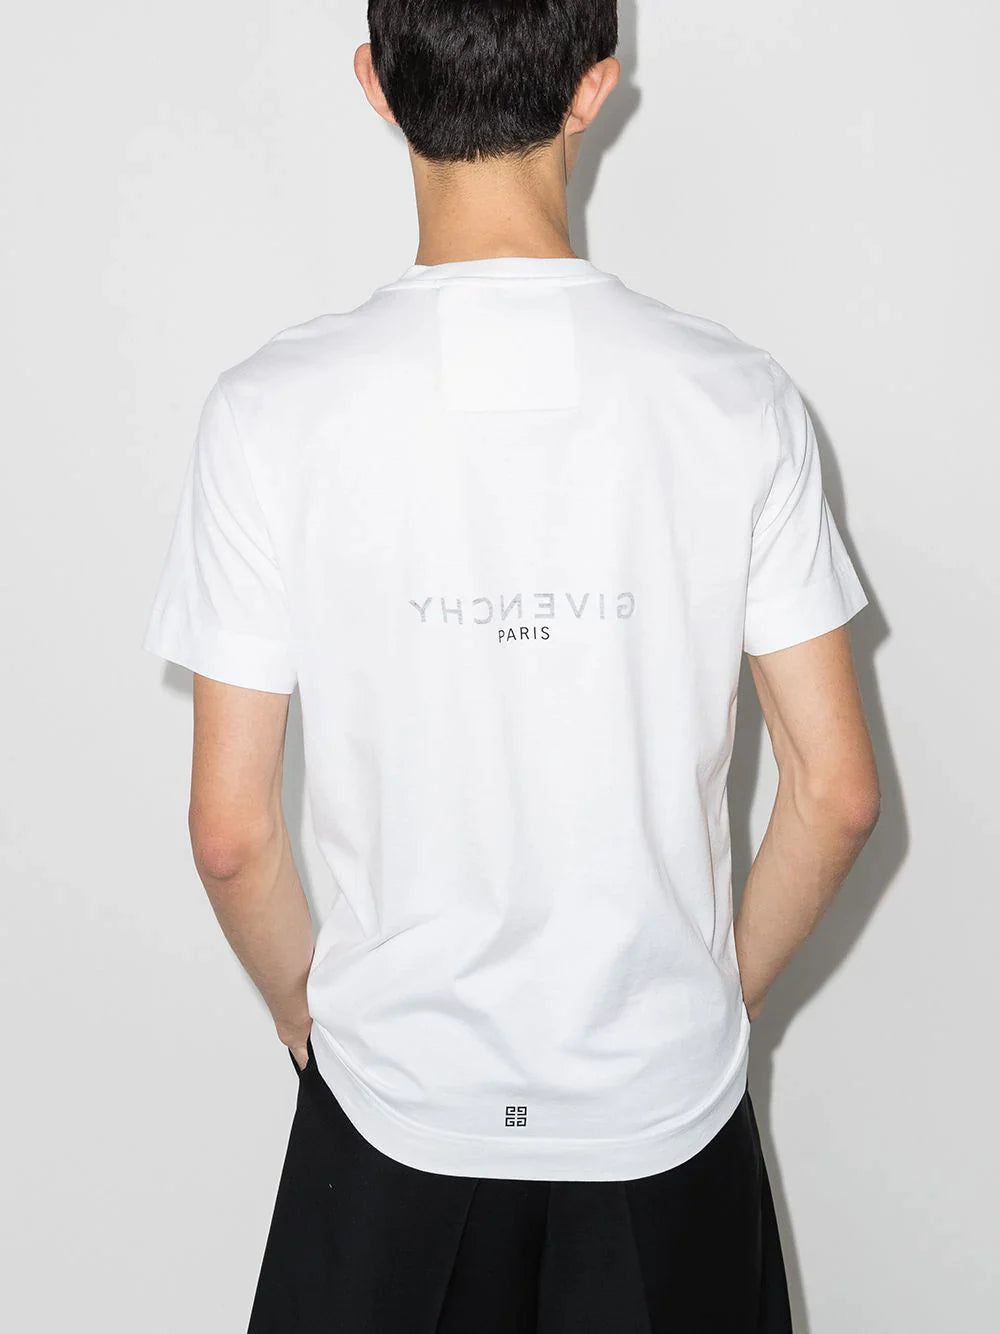 Givenchy Reverse Paris Logo Print Oversized T-Shirt in White